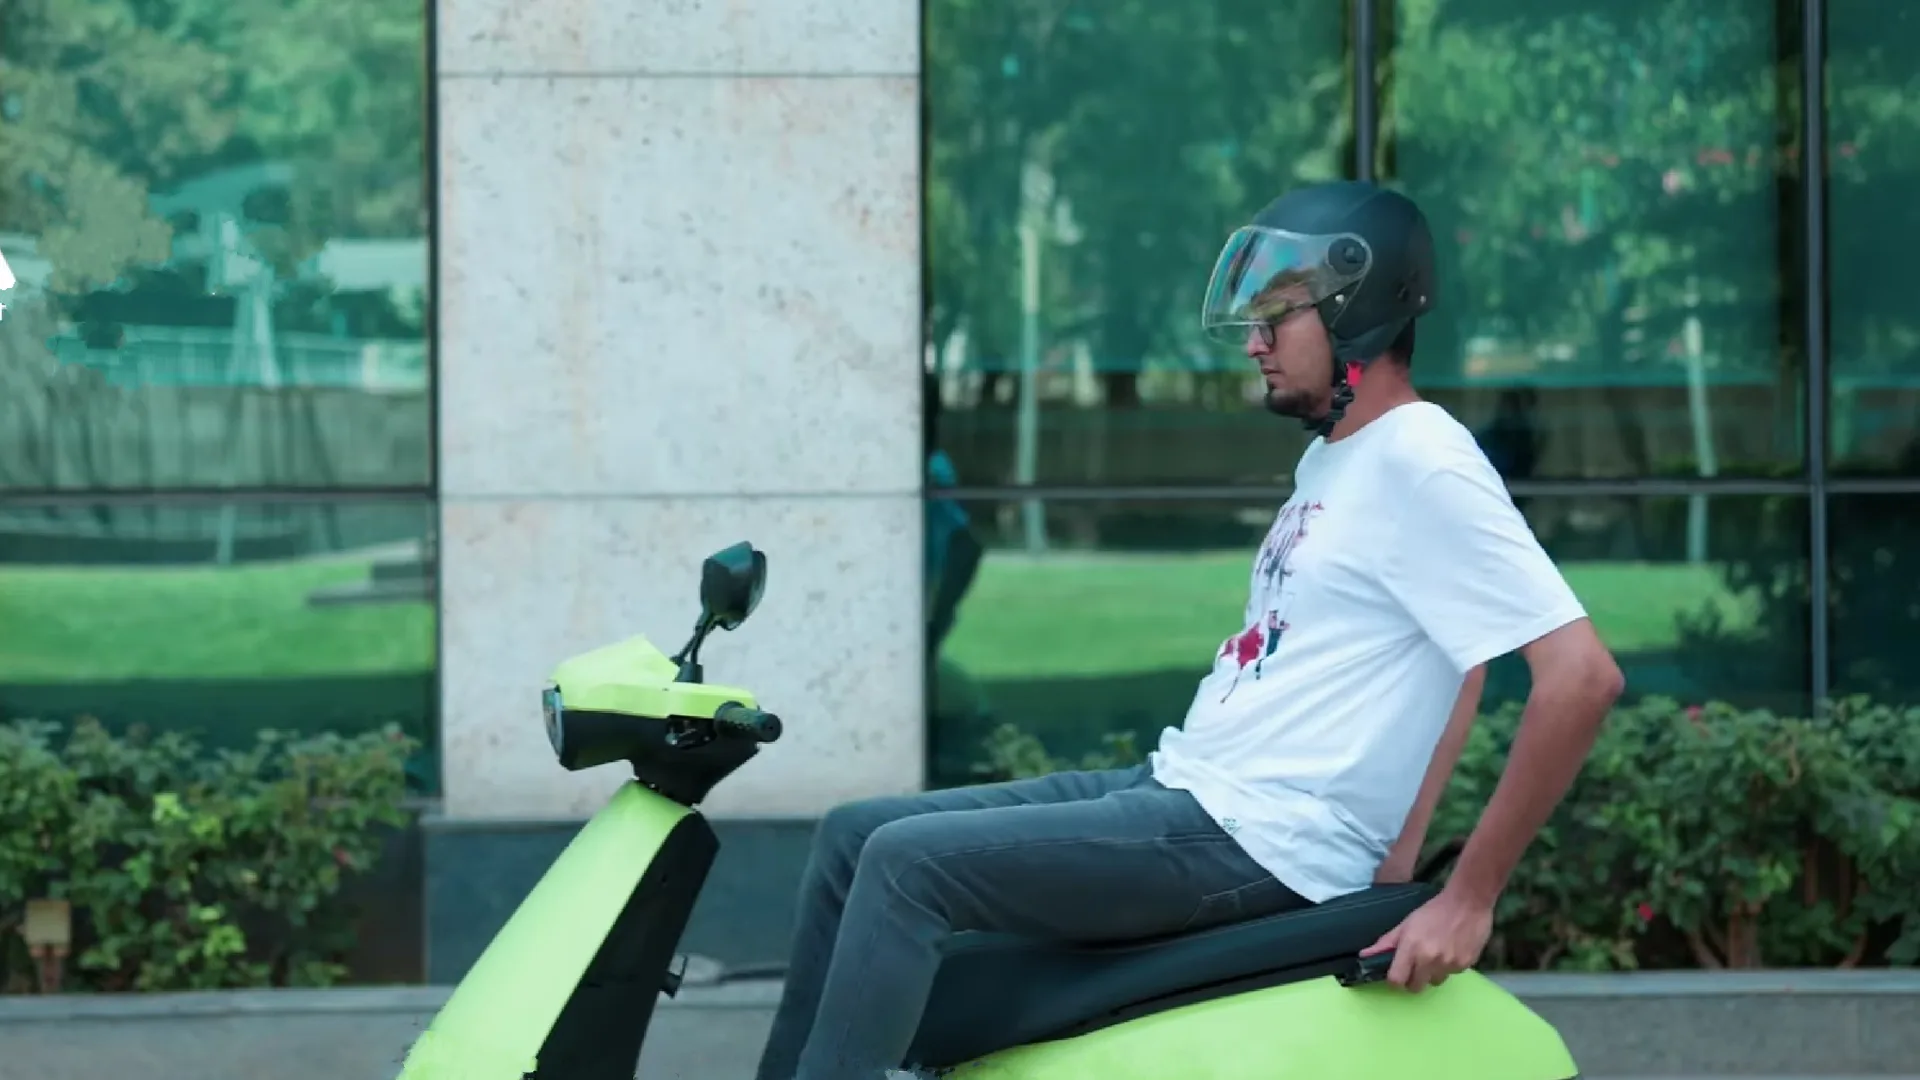 Ola Solo - The autonomous electric scooter that drives itself